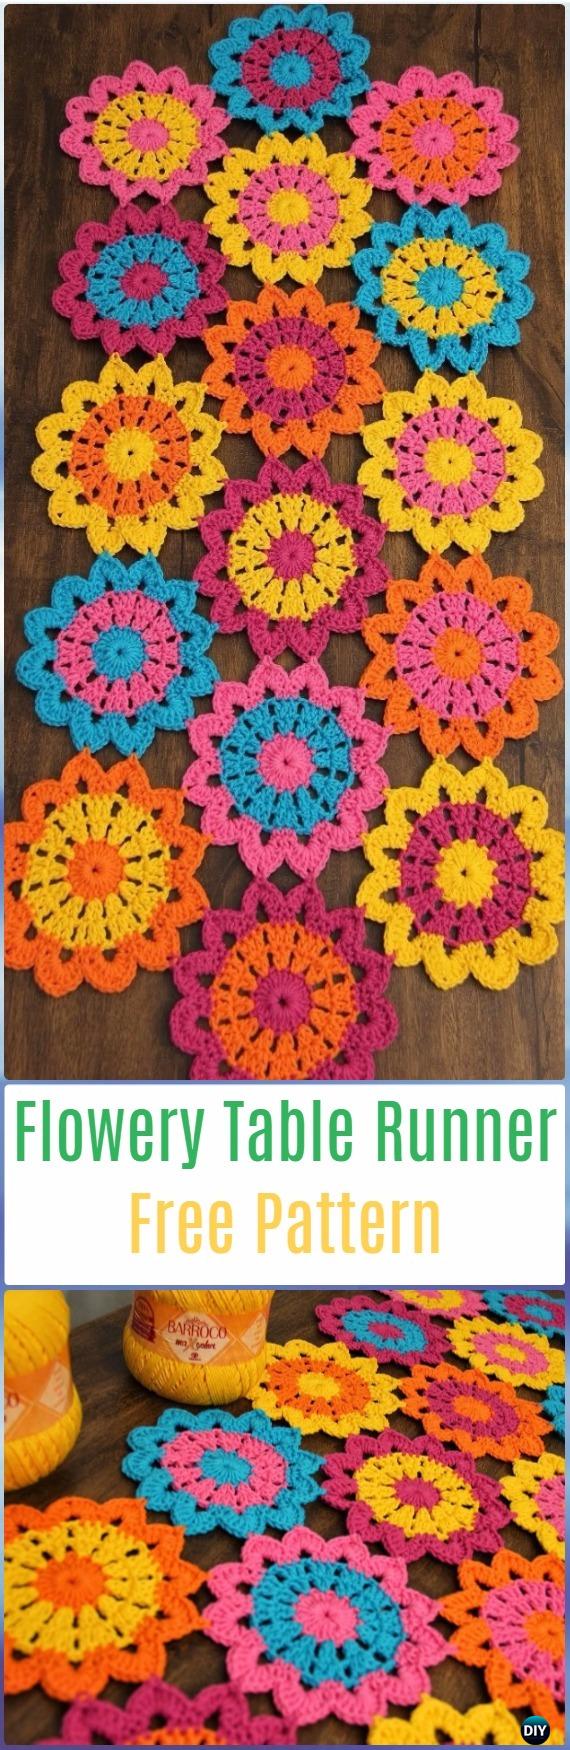 Crochet Flowery Table Runner Free Pattern- Crochet Table Runner Free Patterns